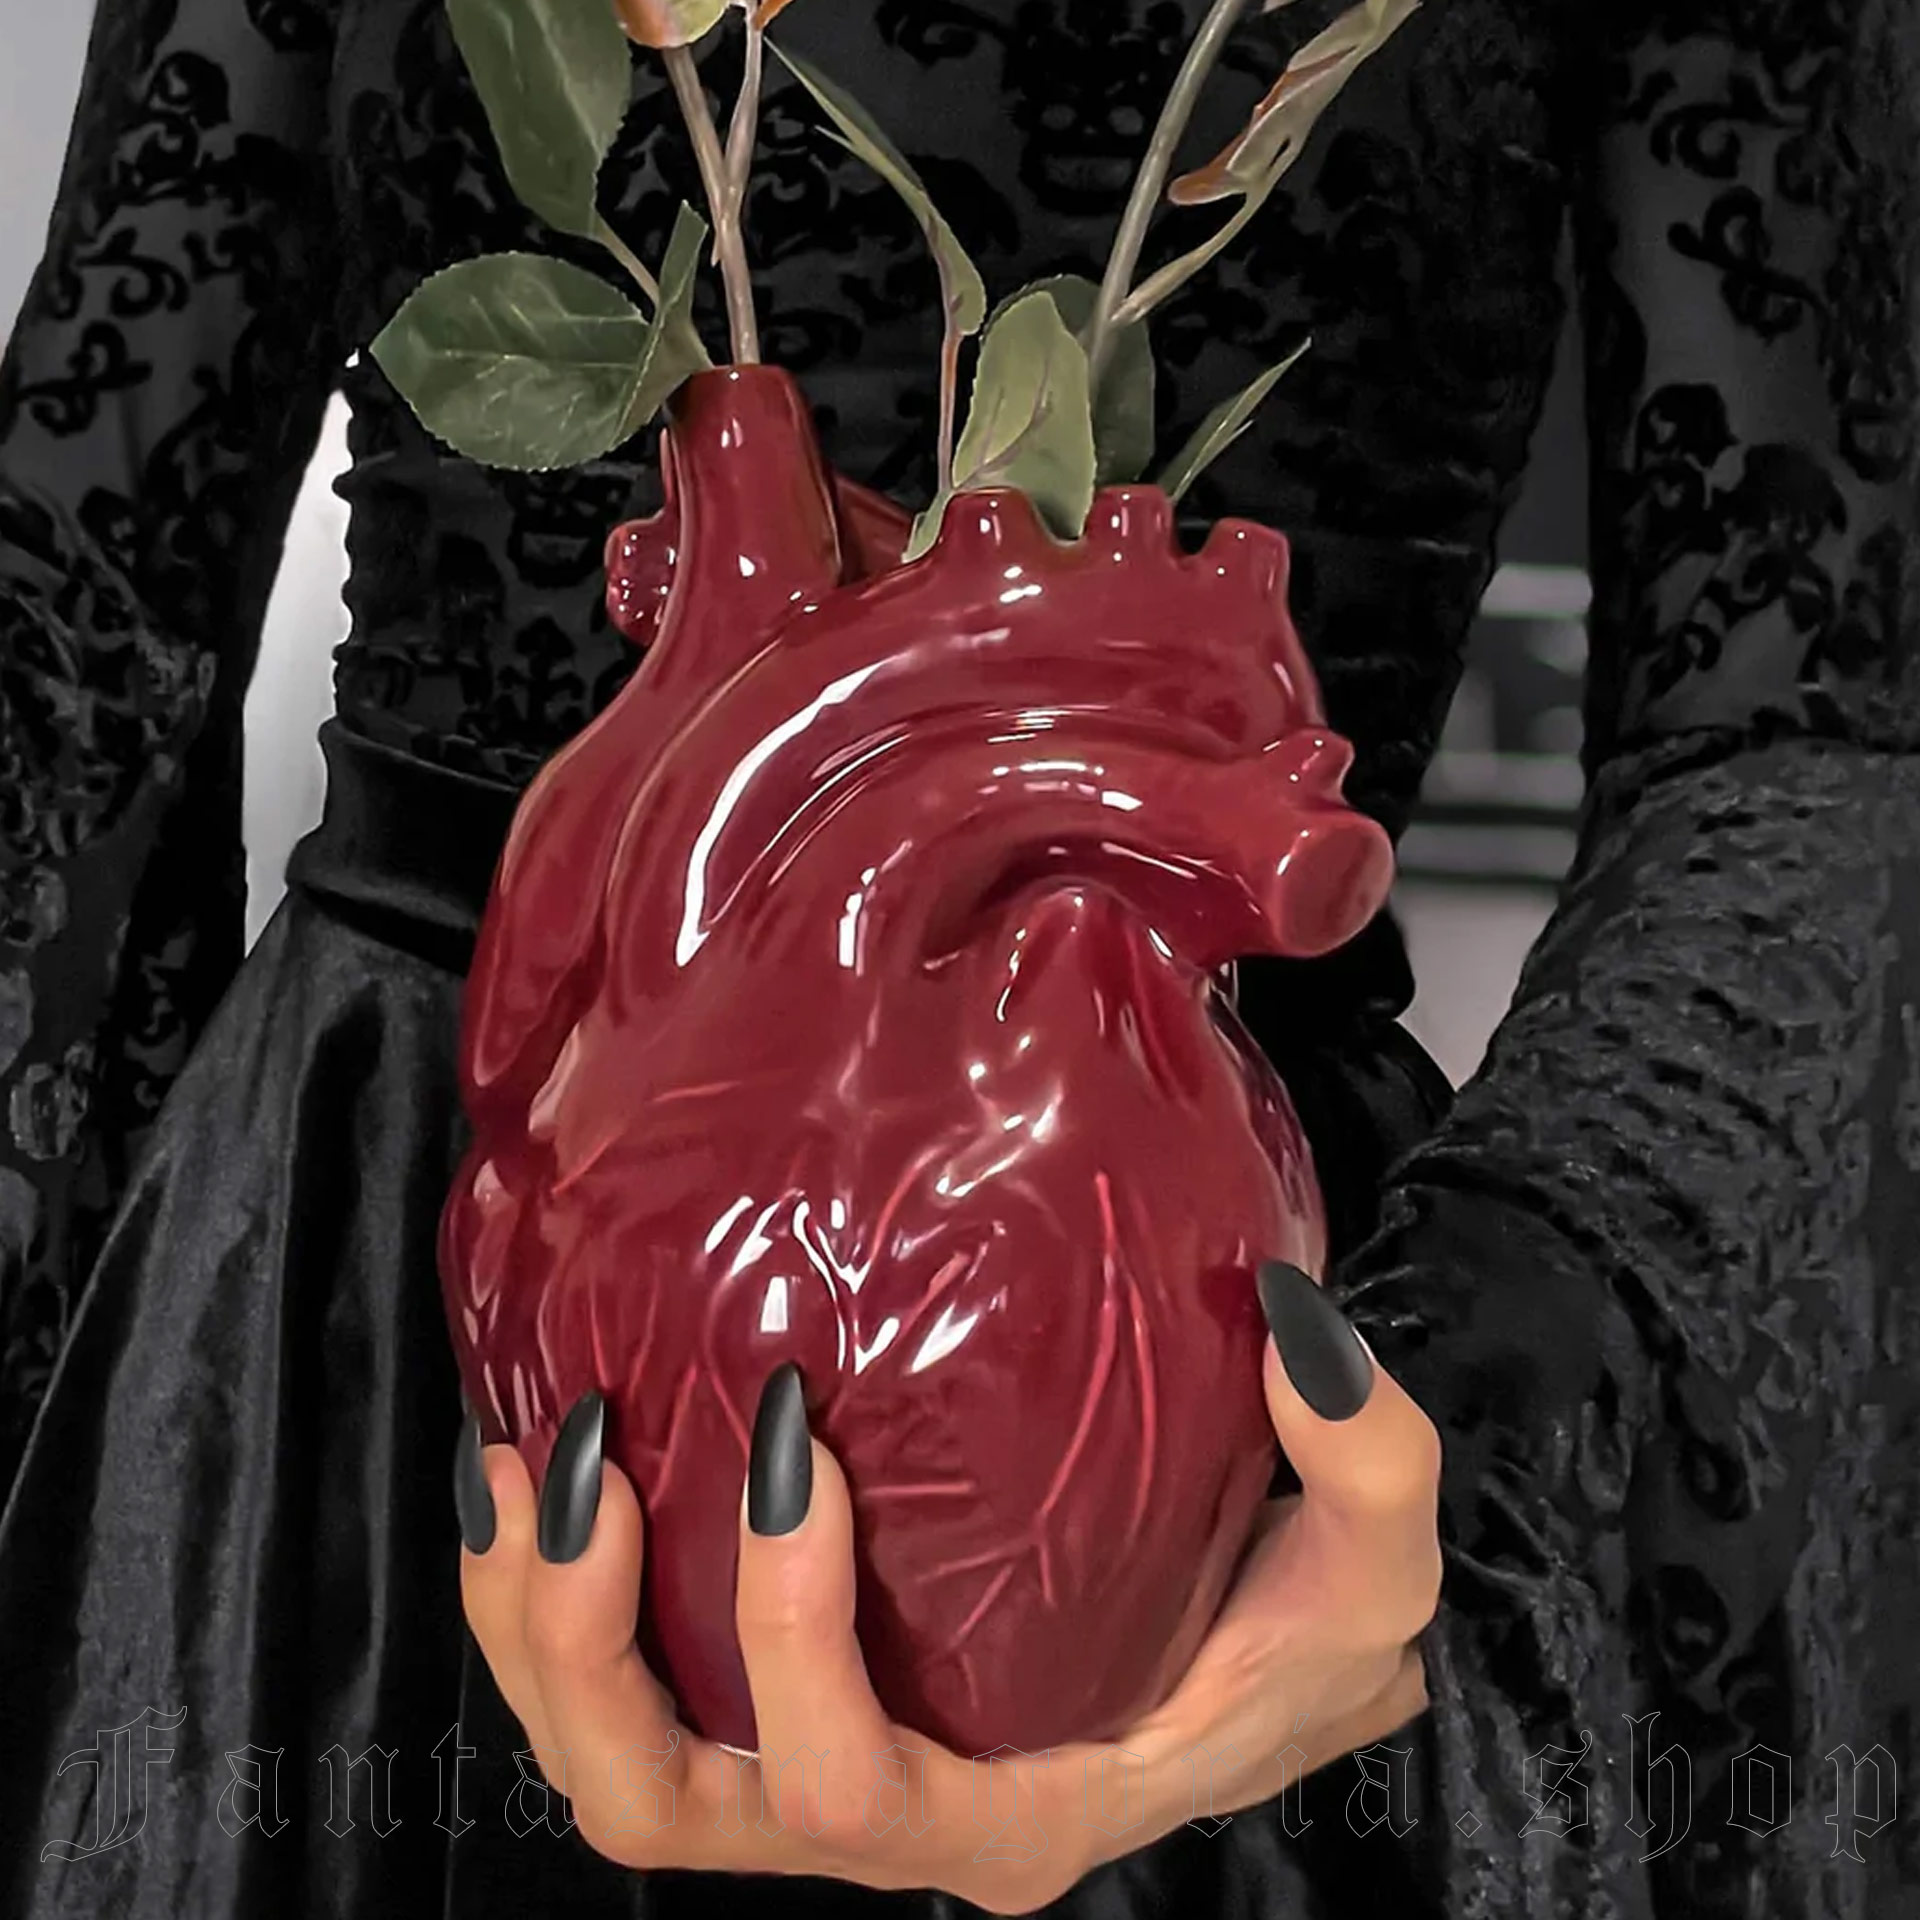 Ana-Tomic Heart Vase